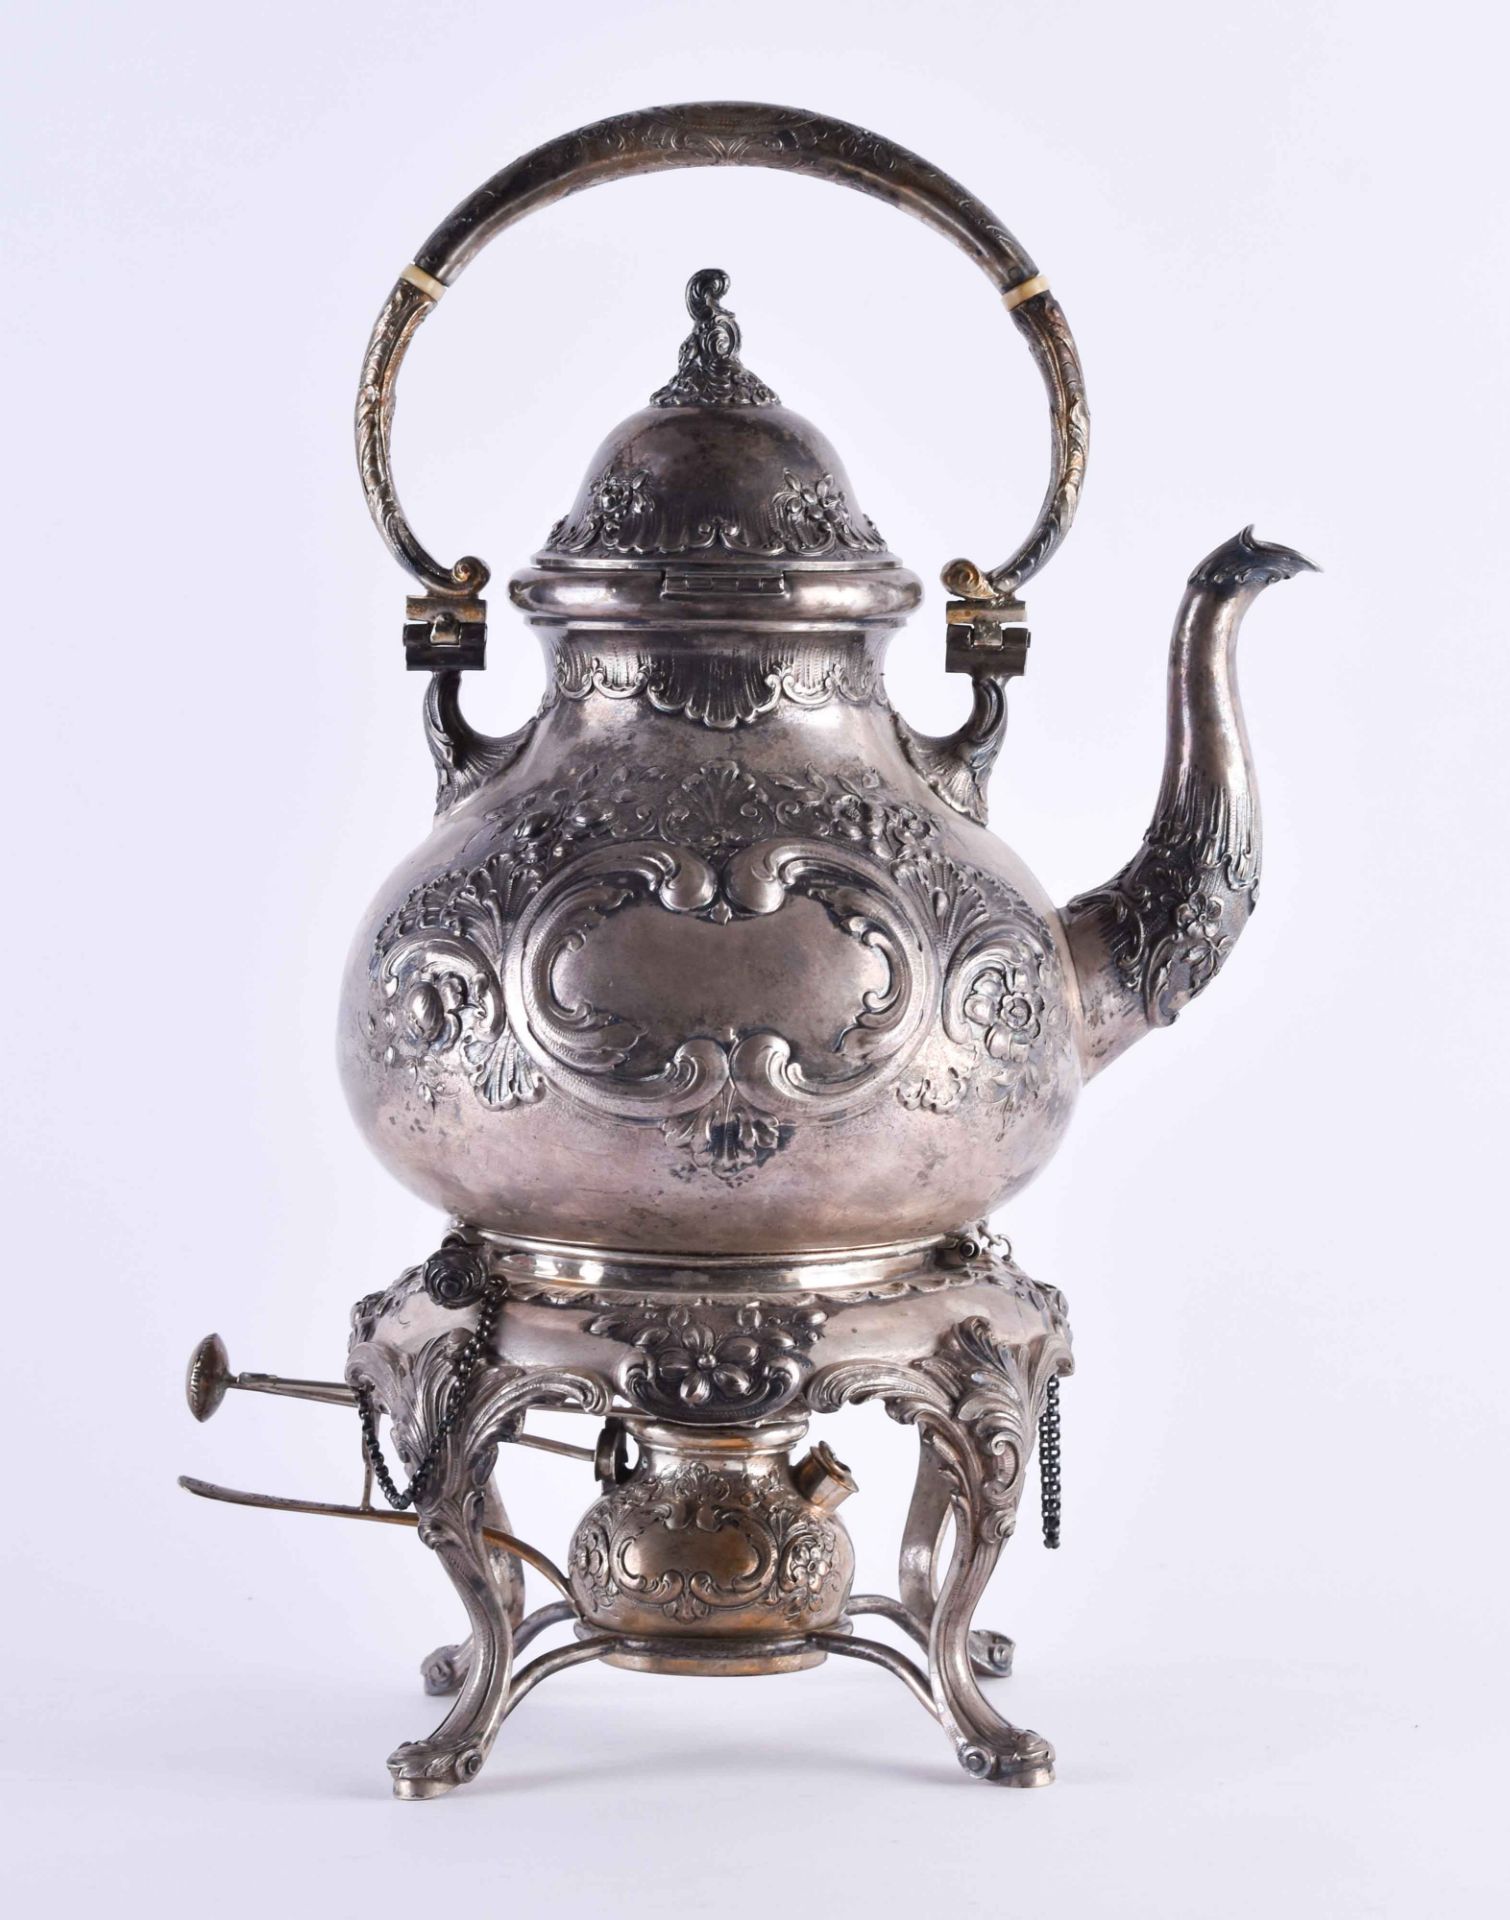 Tea kettle on rechaud, German around 1900 - Image 3 of 3